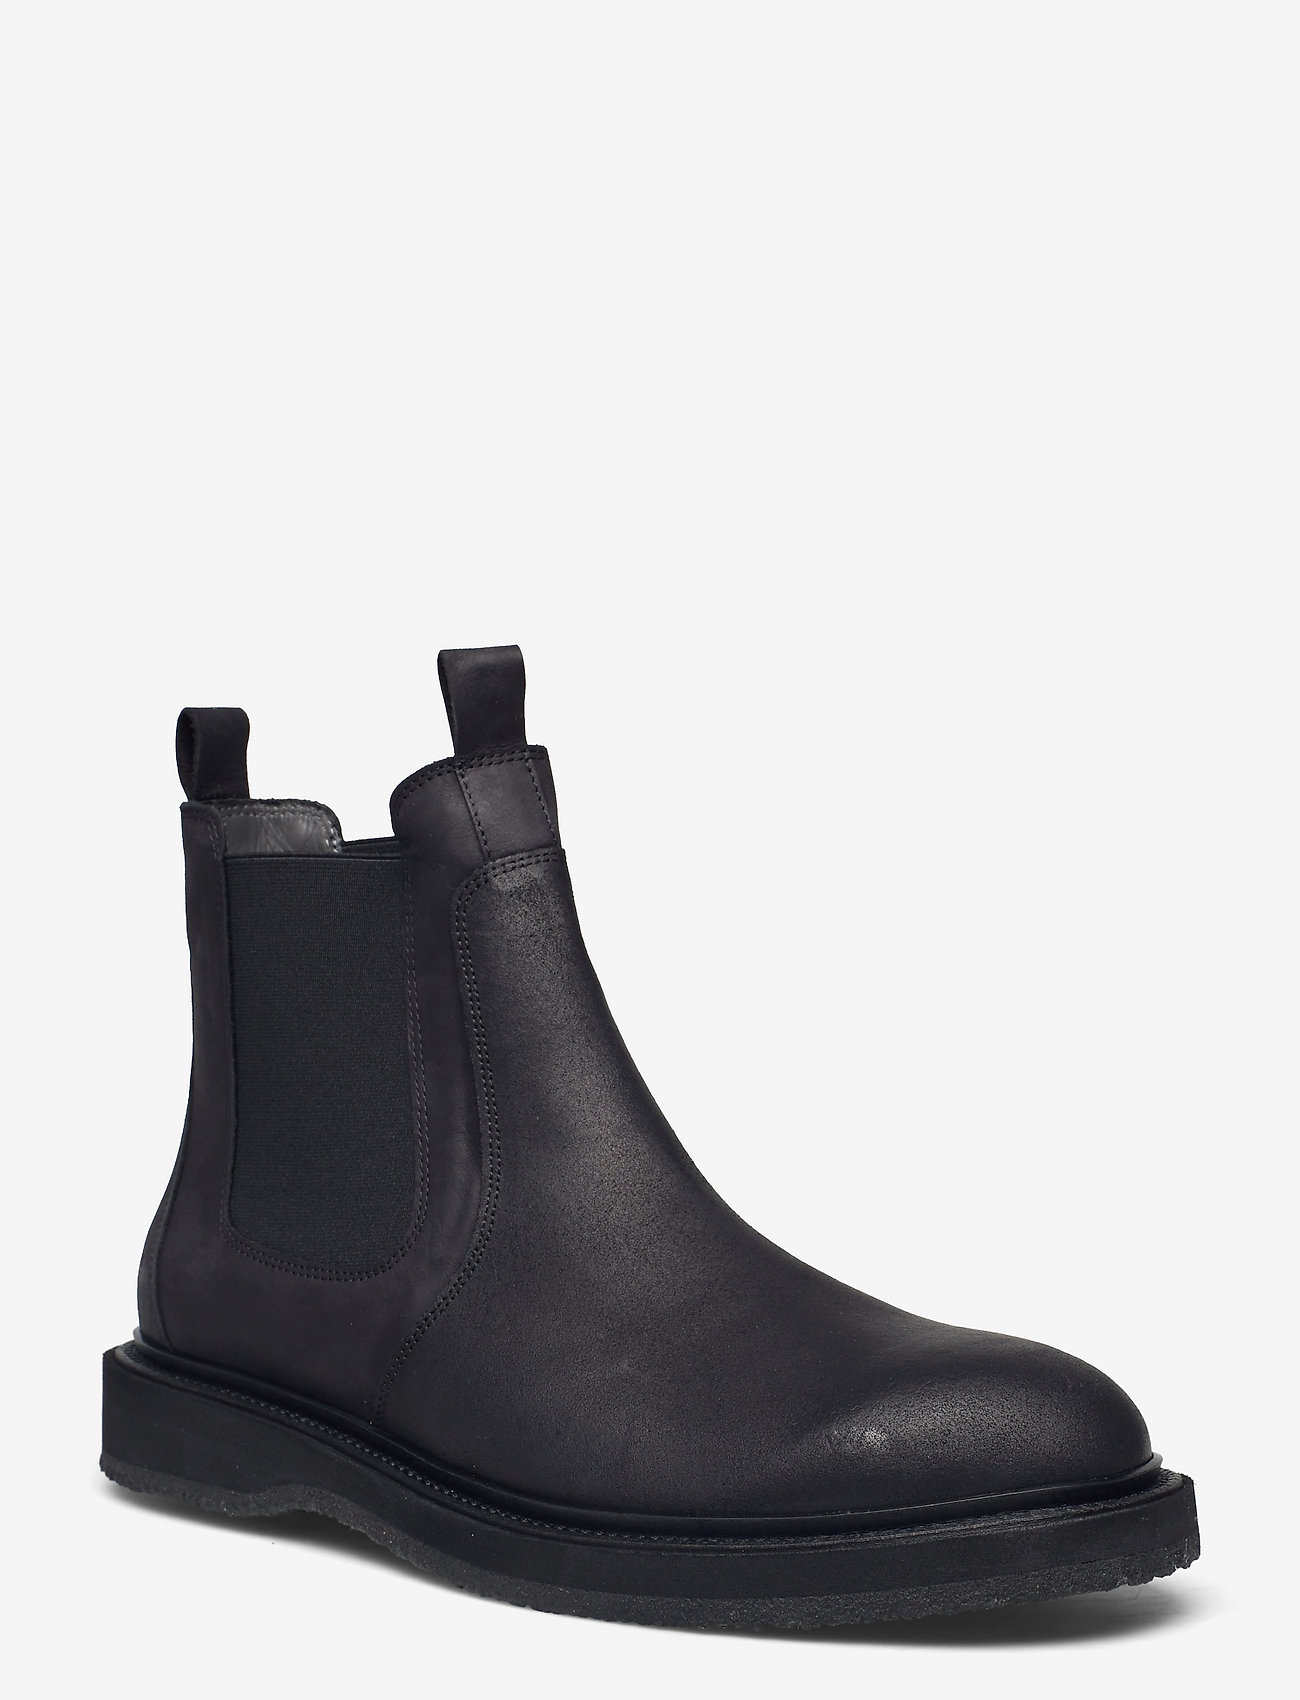 ANGULUS - Boots - flat - chelsea boots - 2100/1652/001 black/black/blac - 0